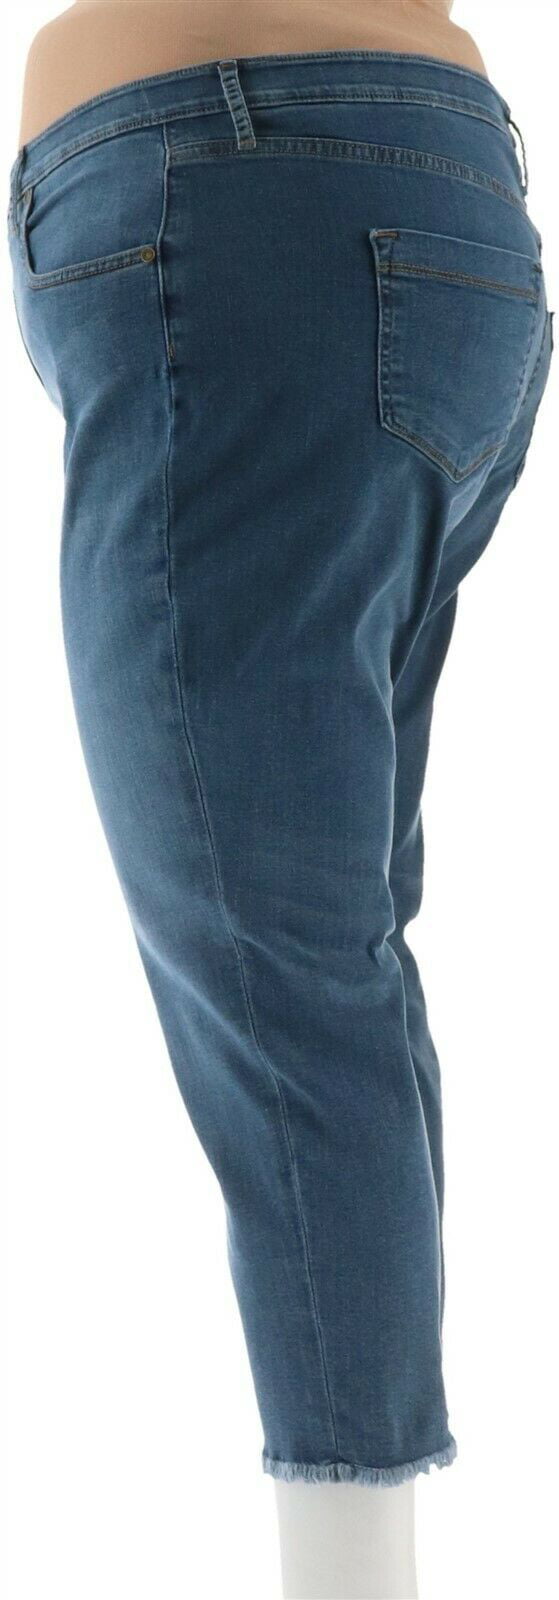 Isaac Mizrahi Petite Frayed Hem Ankle Jeans Dark Indigo 8P NEW A302217 